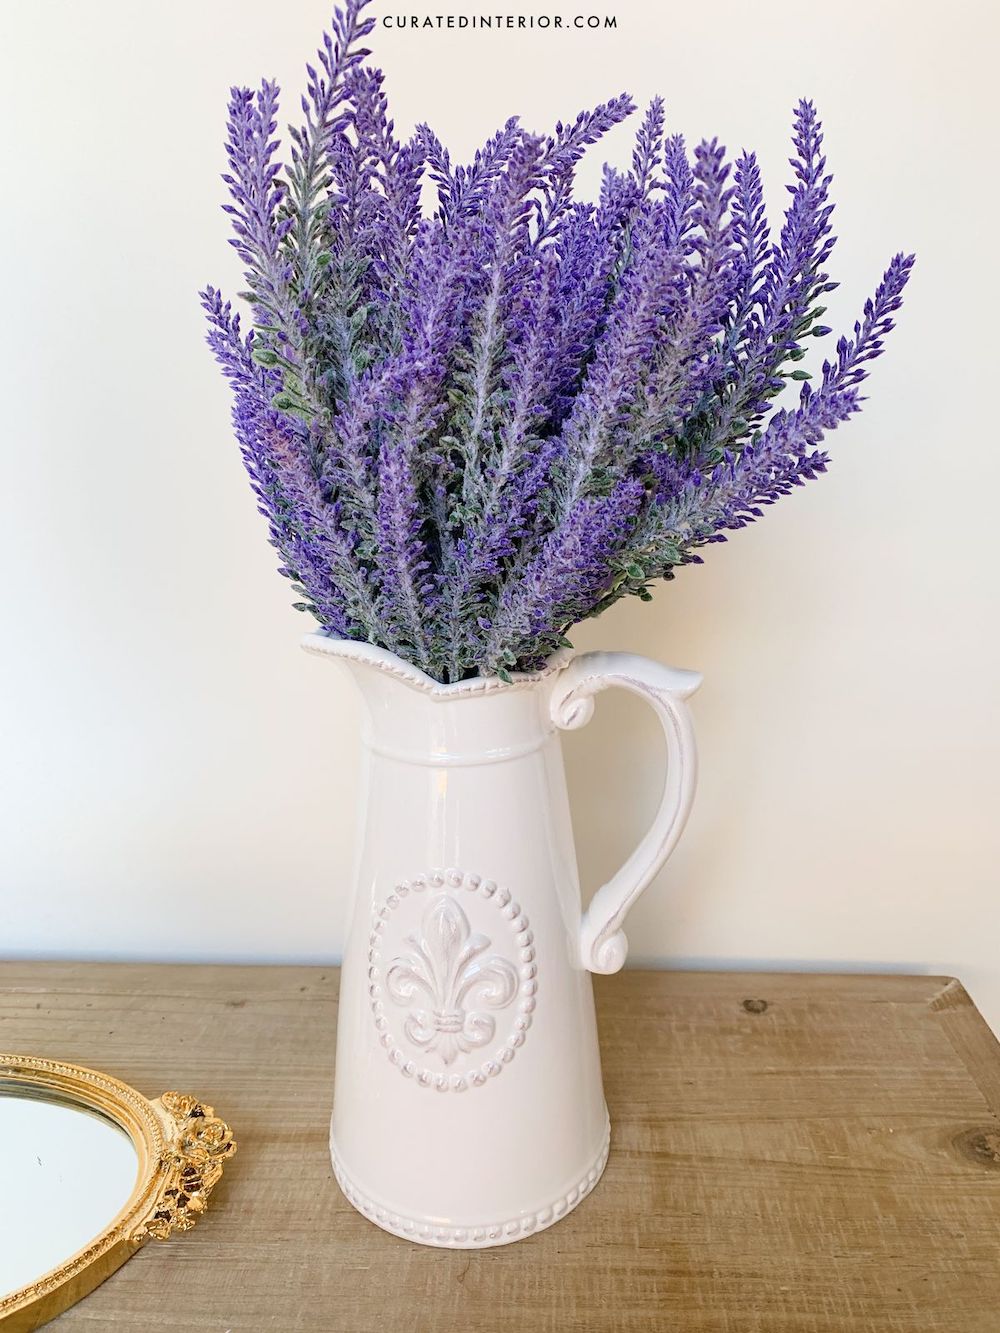 French Country White Fleur de Lis Farmhouse Pitcher with Artificial Lavender stems